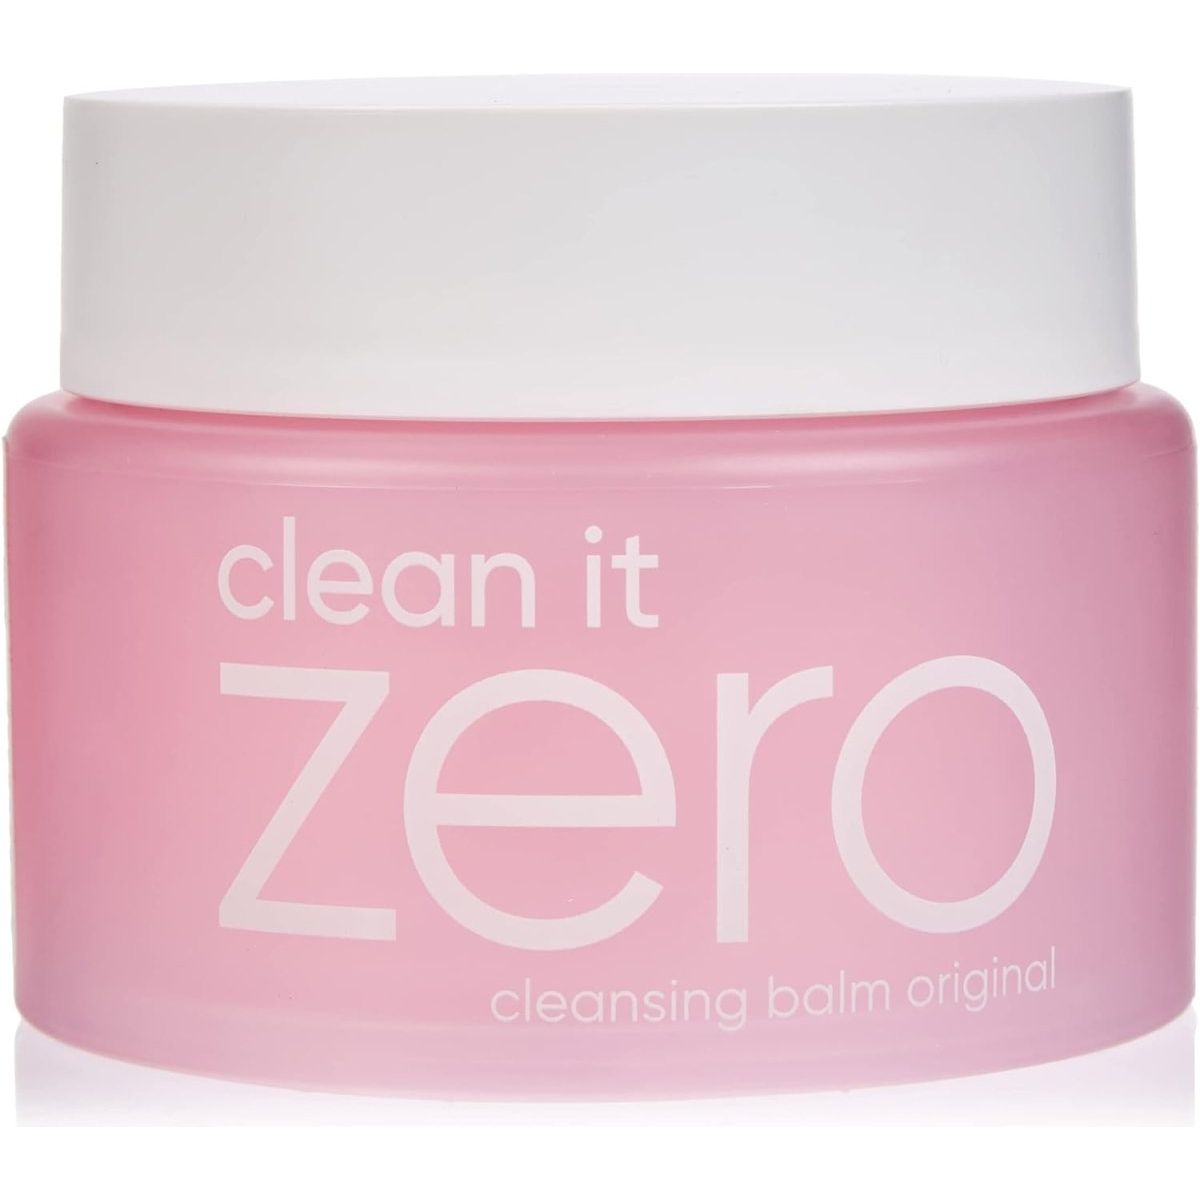 Banila Clean It Zero Original - 100ml - DG International Ventures Limited